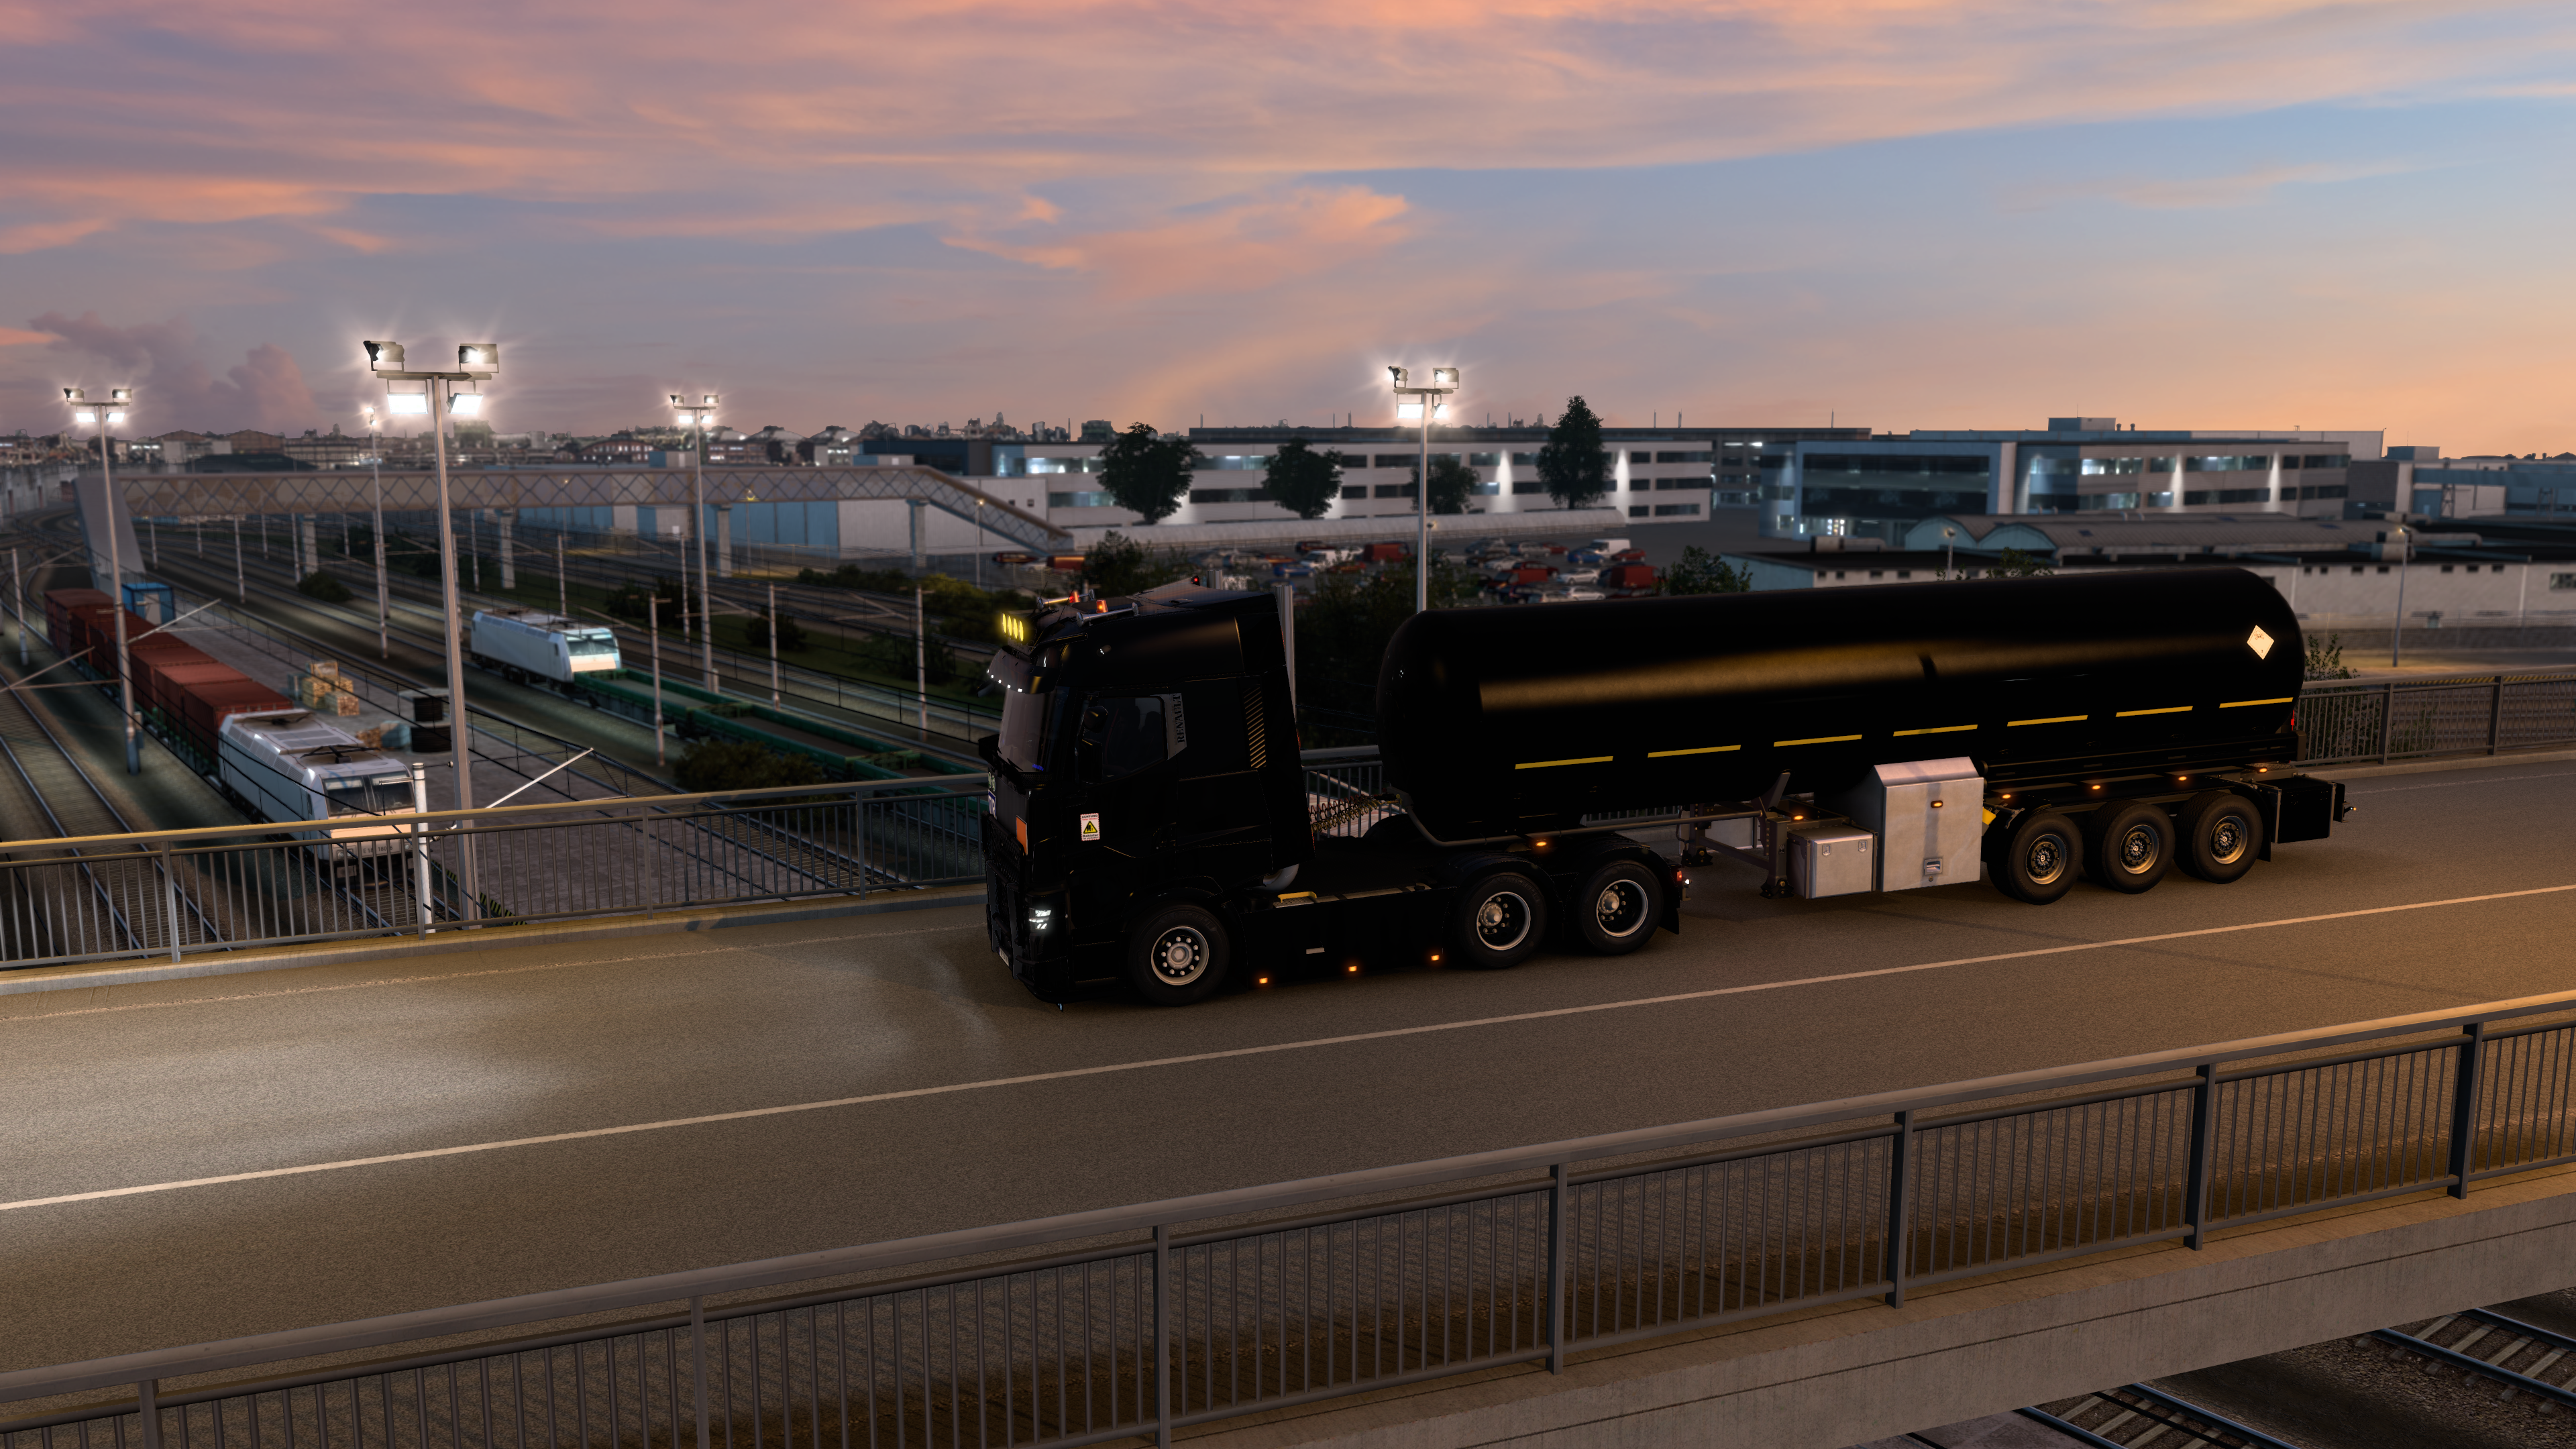 Renault Truck Euro Truck Simulator 2 Sunset Glow Vehicle Road Headlights Video Games CGi Sky Clouds 3840x2160